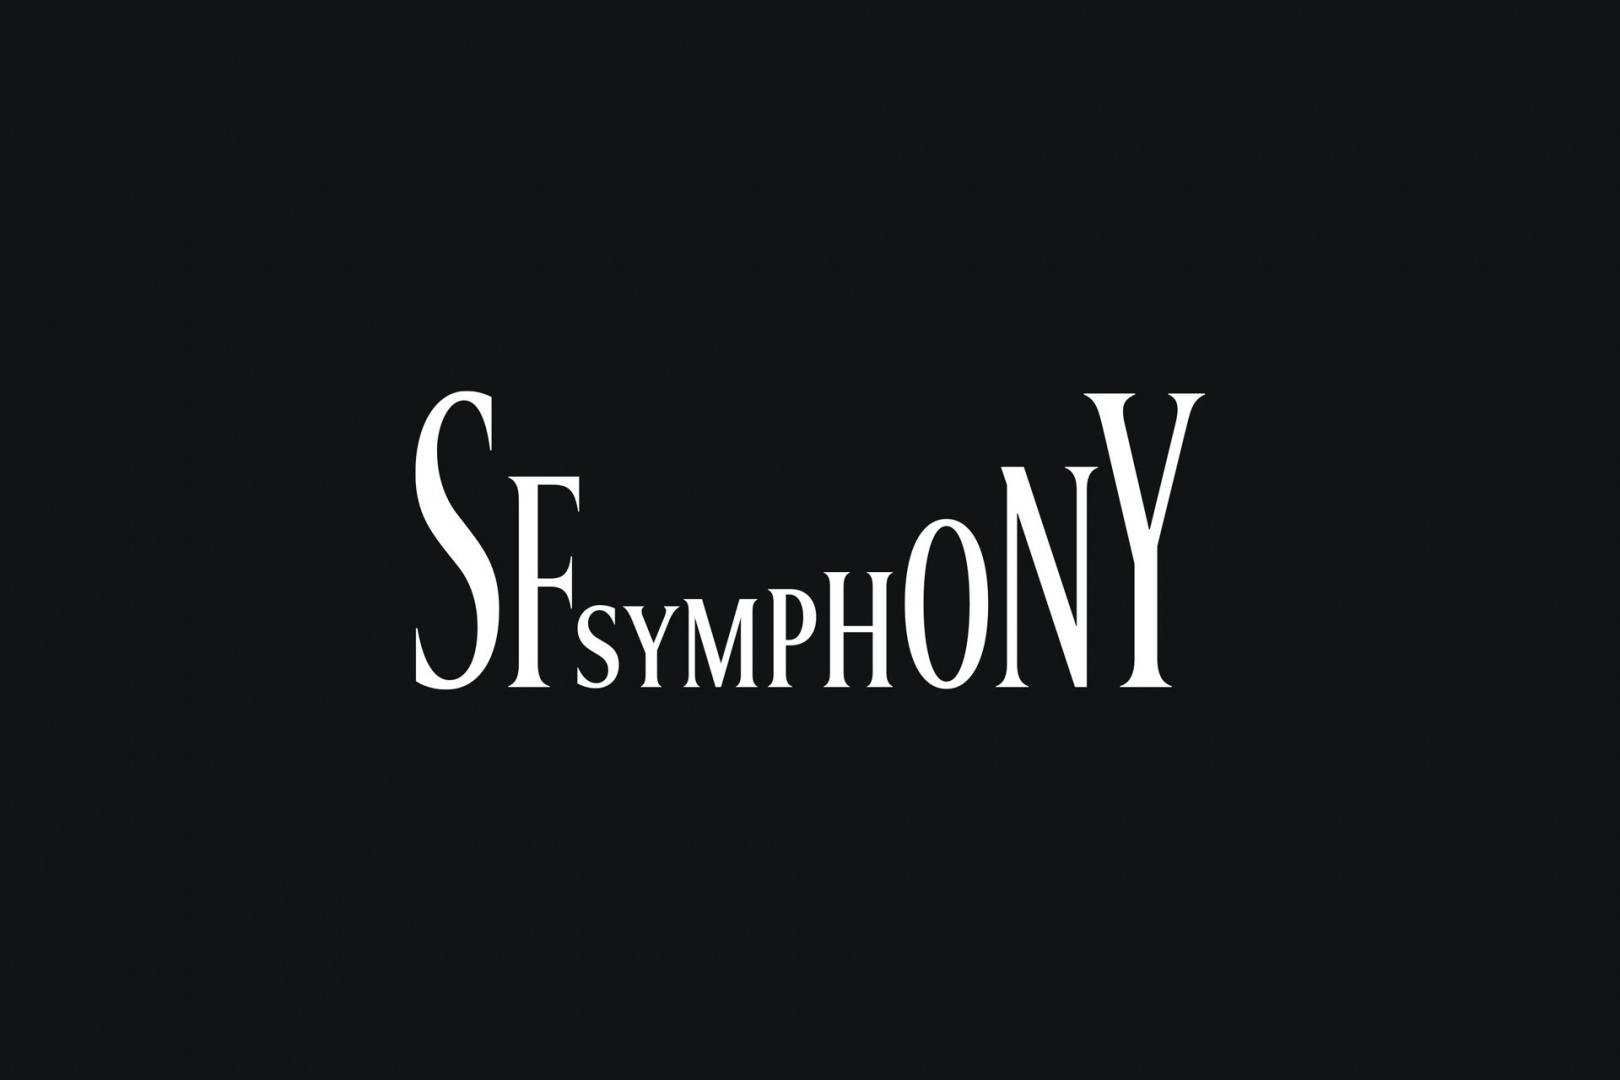 Collins, San Francisco Symphony branding